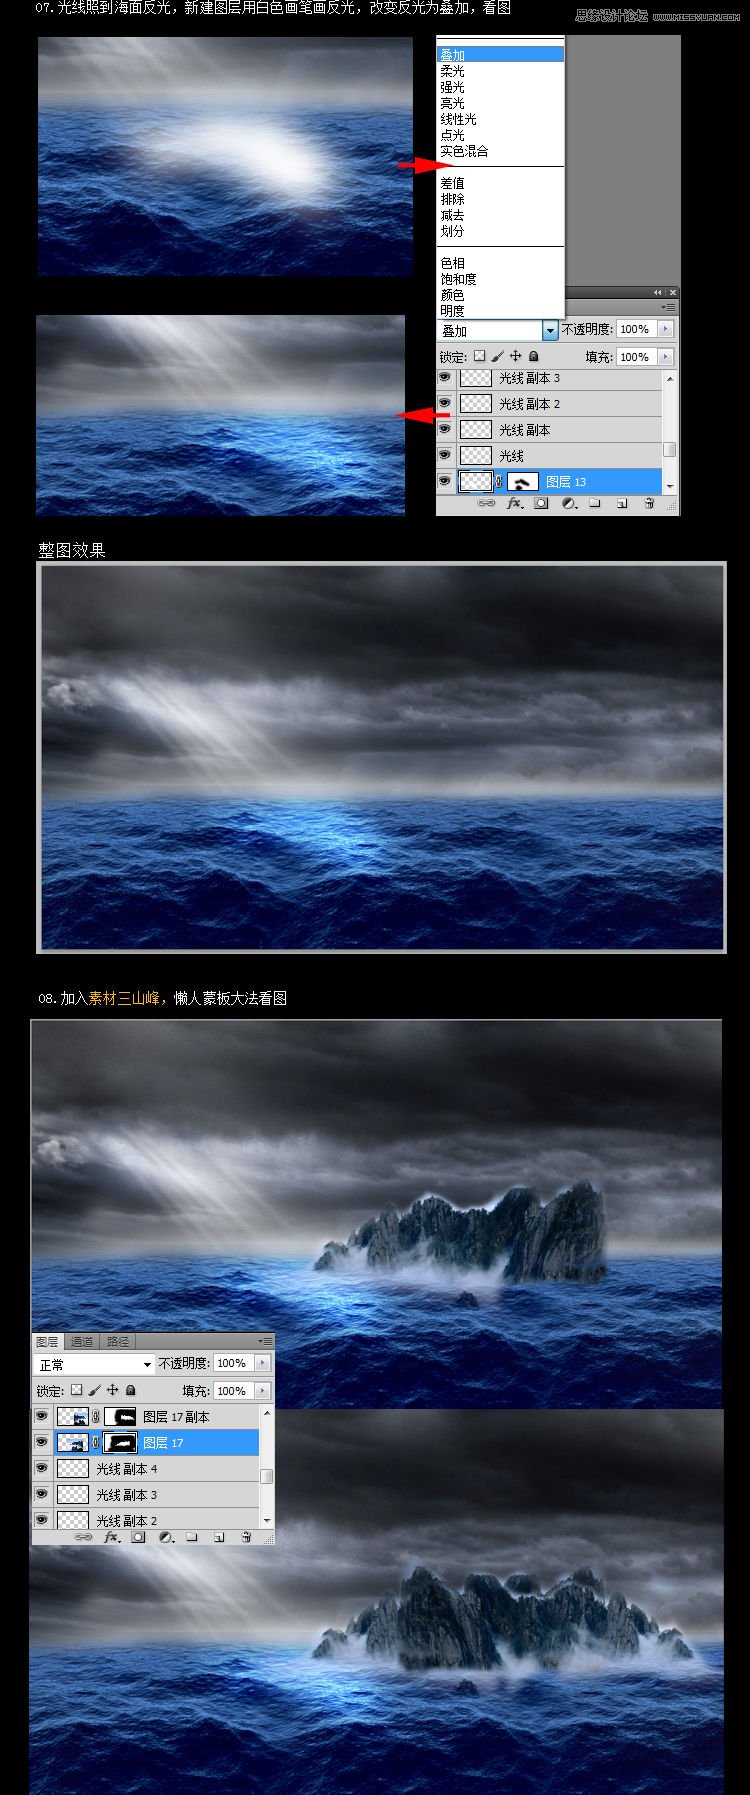 Photoshop合成恐怖氛围的海中孤岛场景3